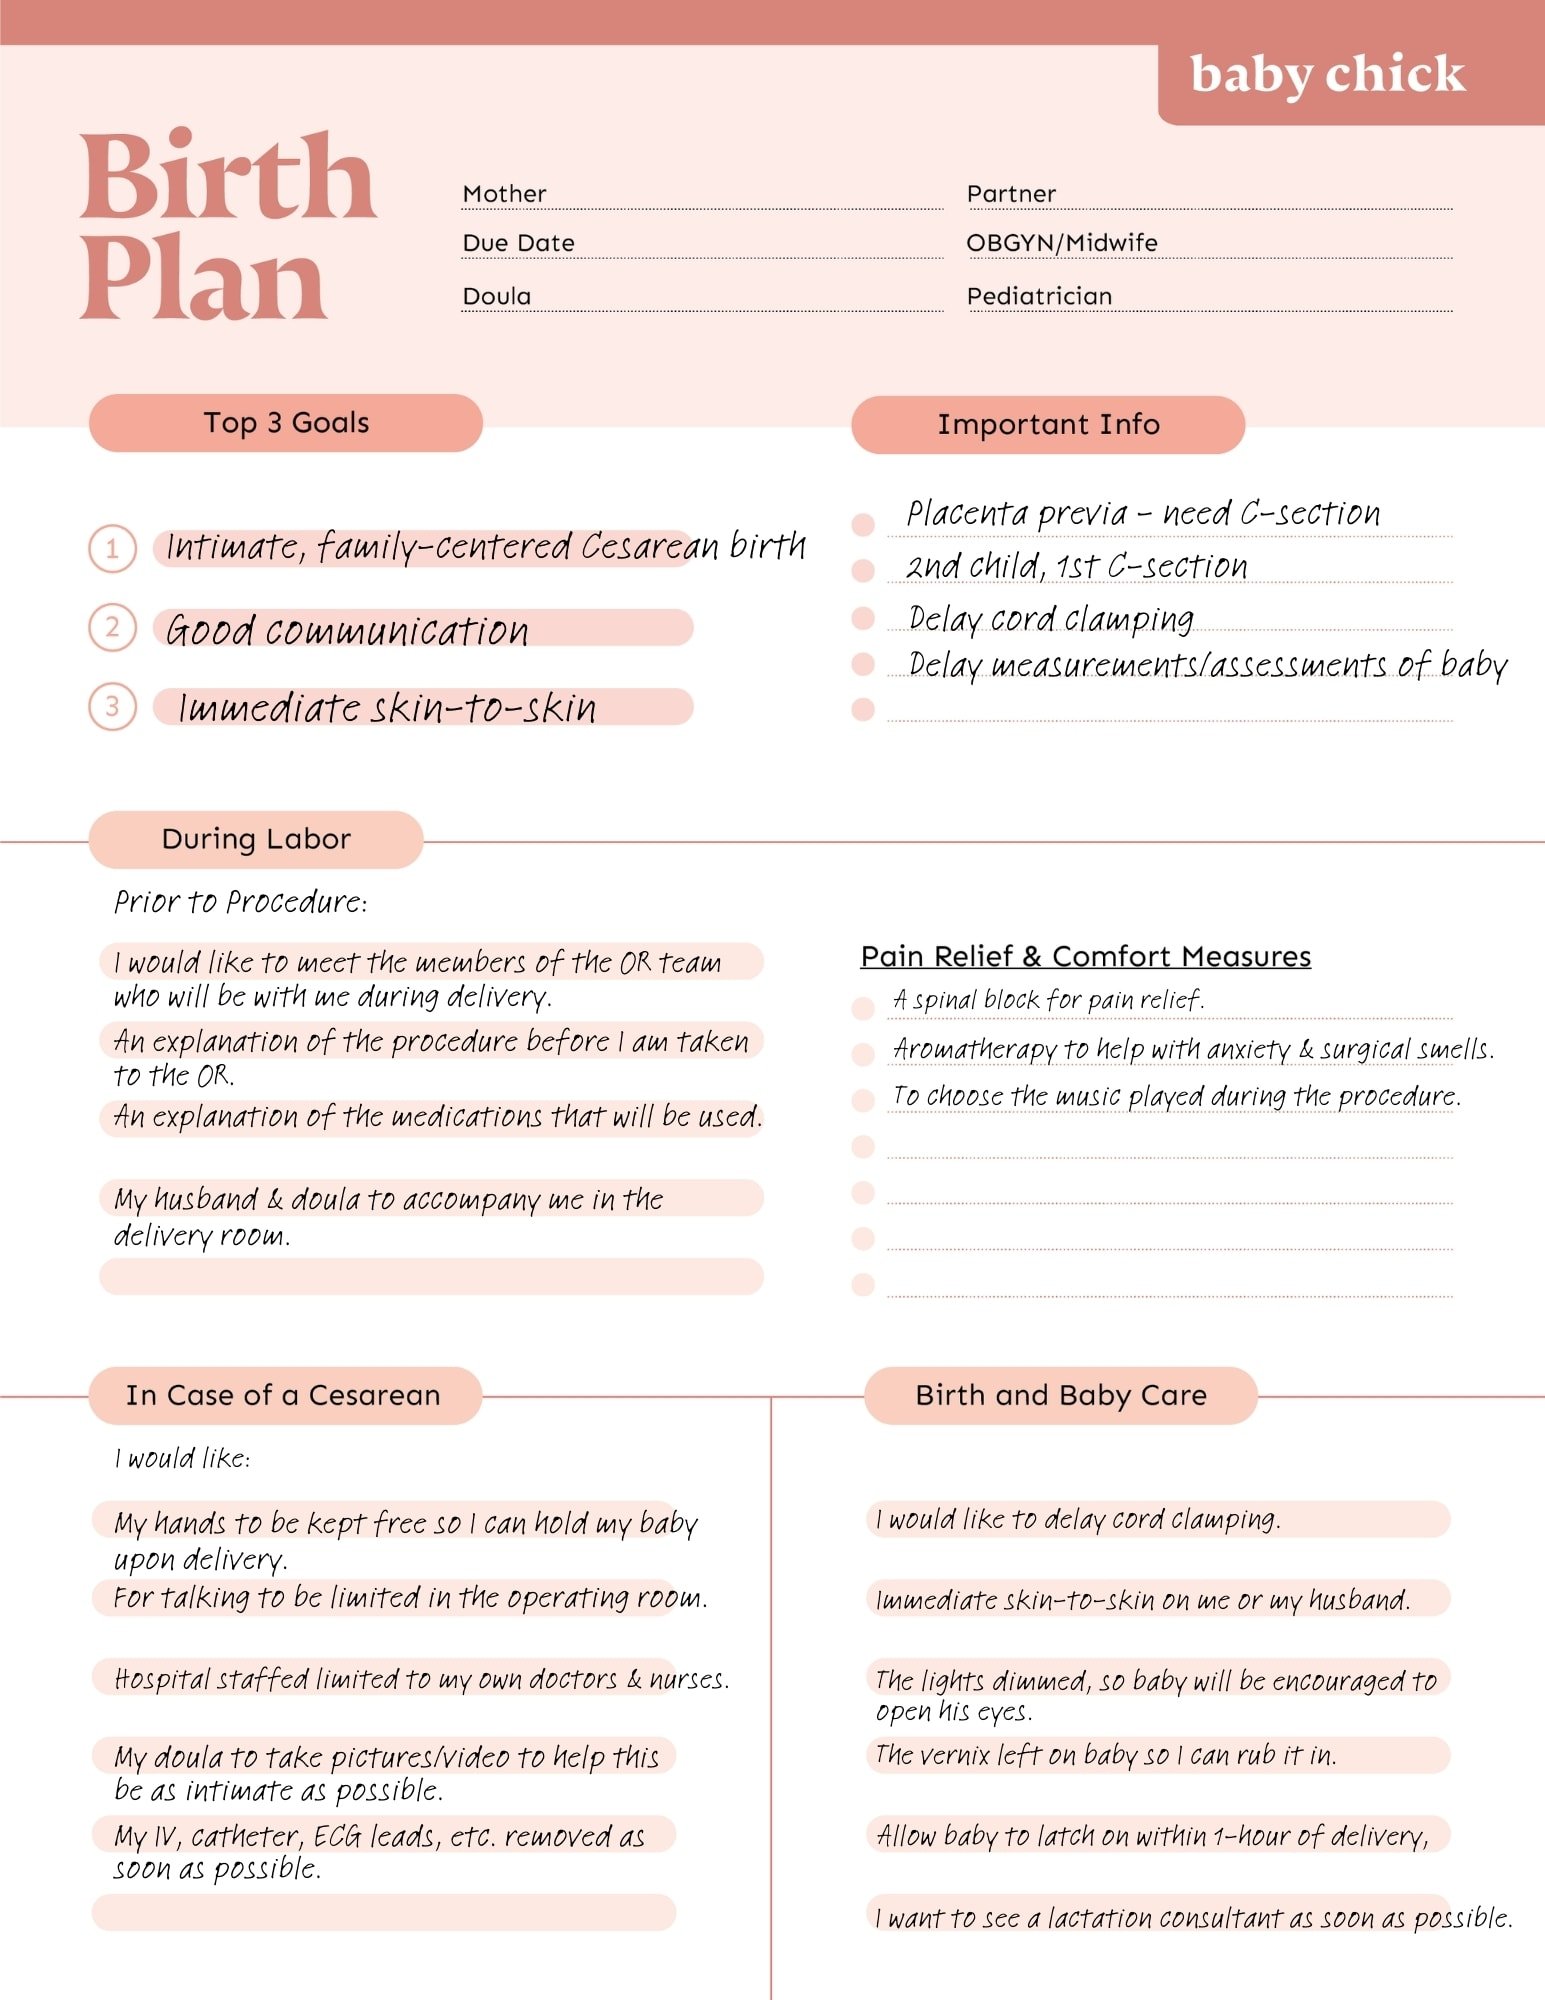 Birth Plan example Cesarean Birth